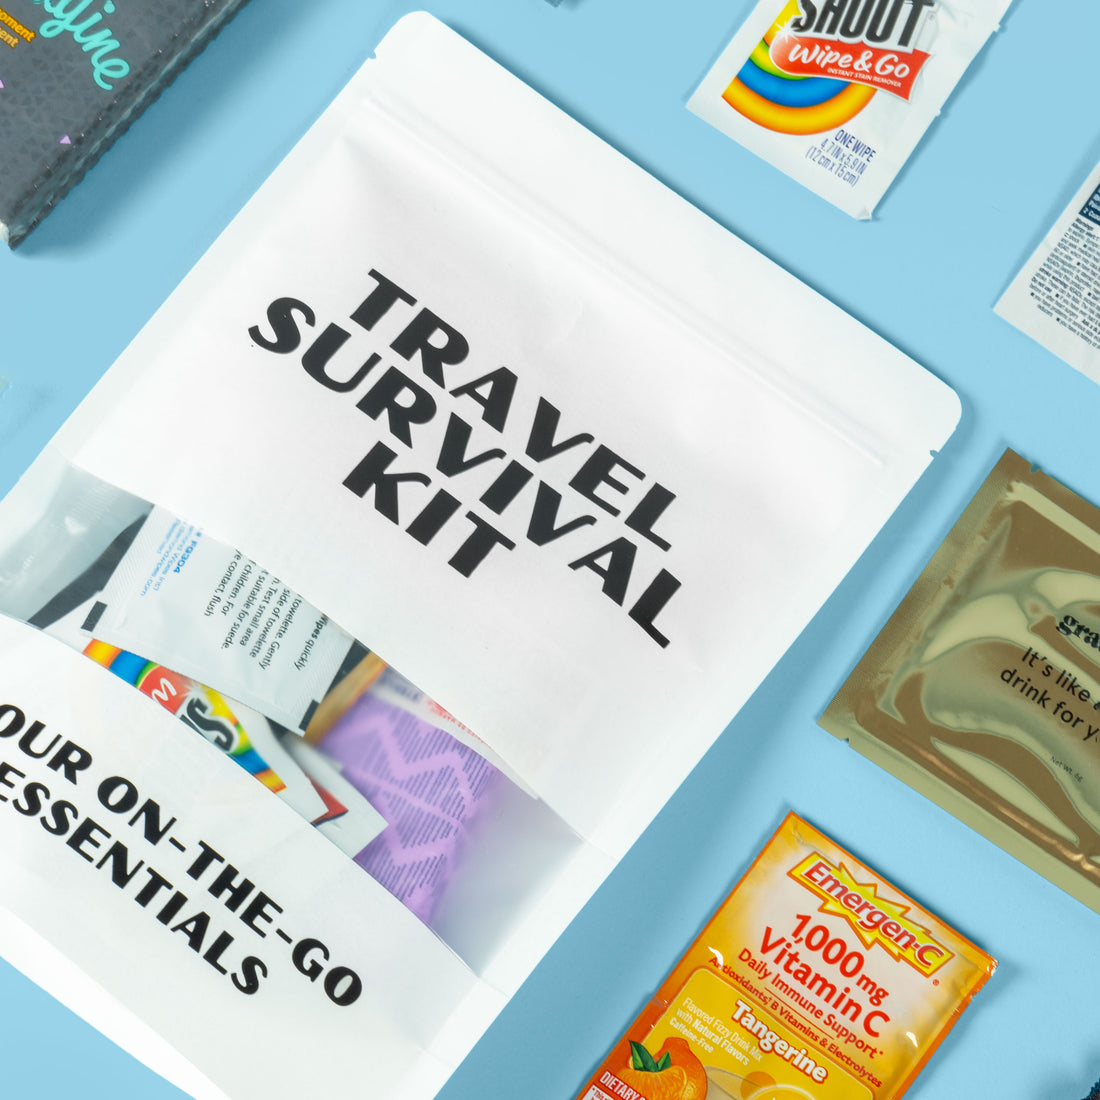 Road Trip Kit Bag Travel Essentials Kit Hangover Kit Recovery Kit